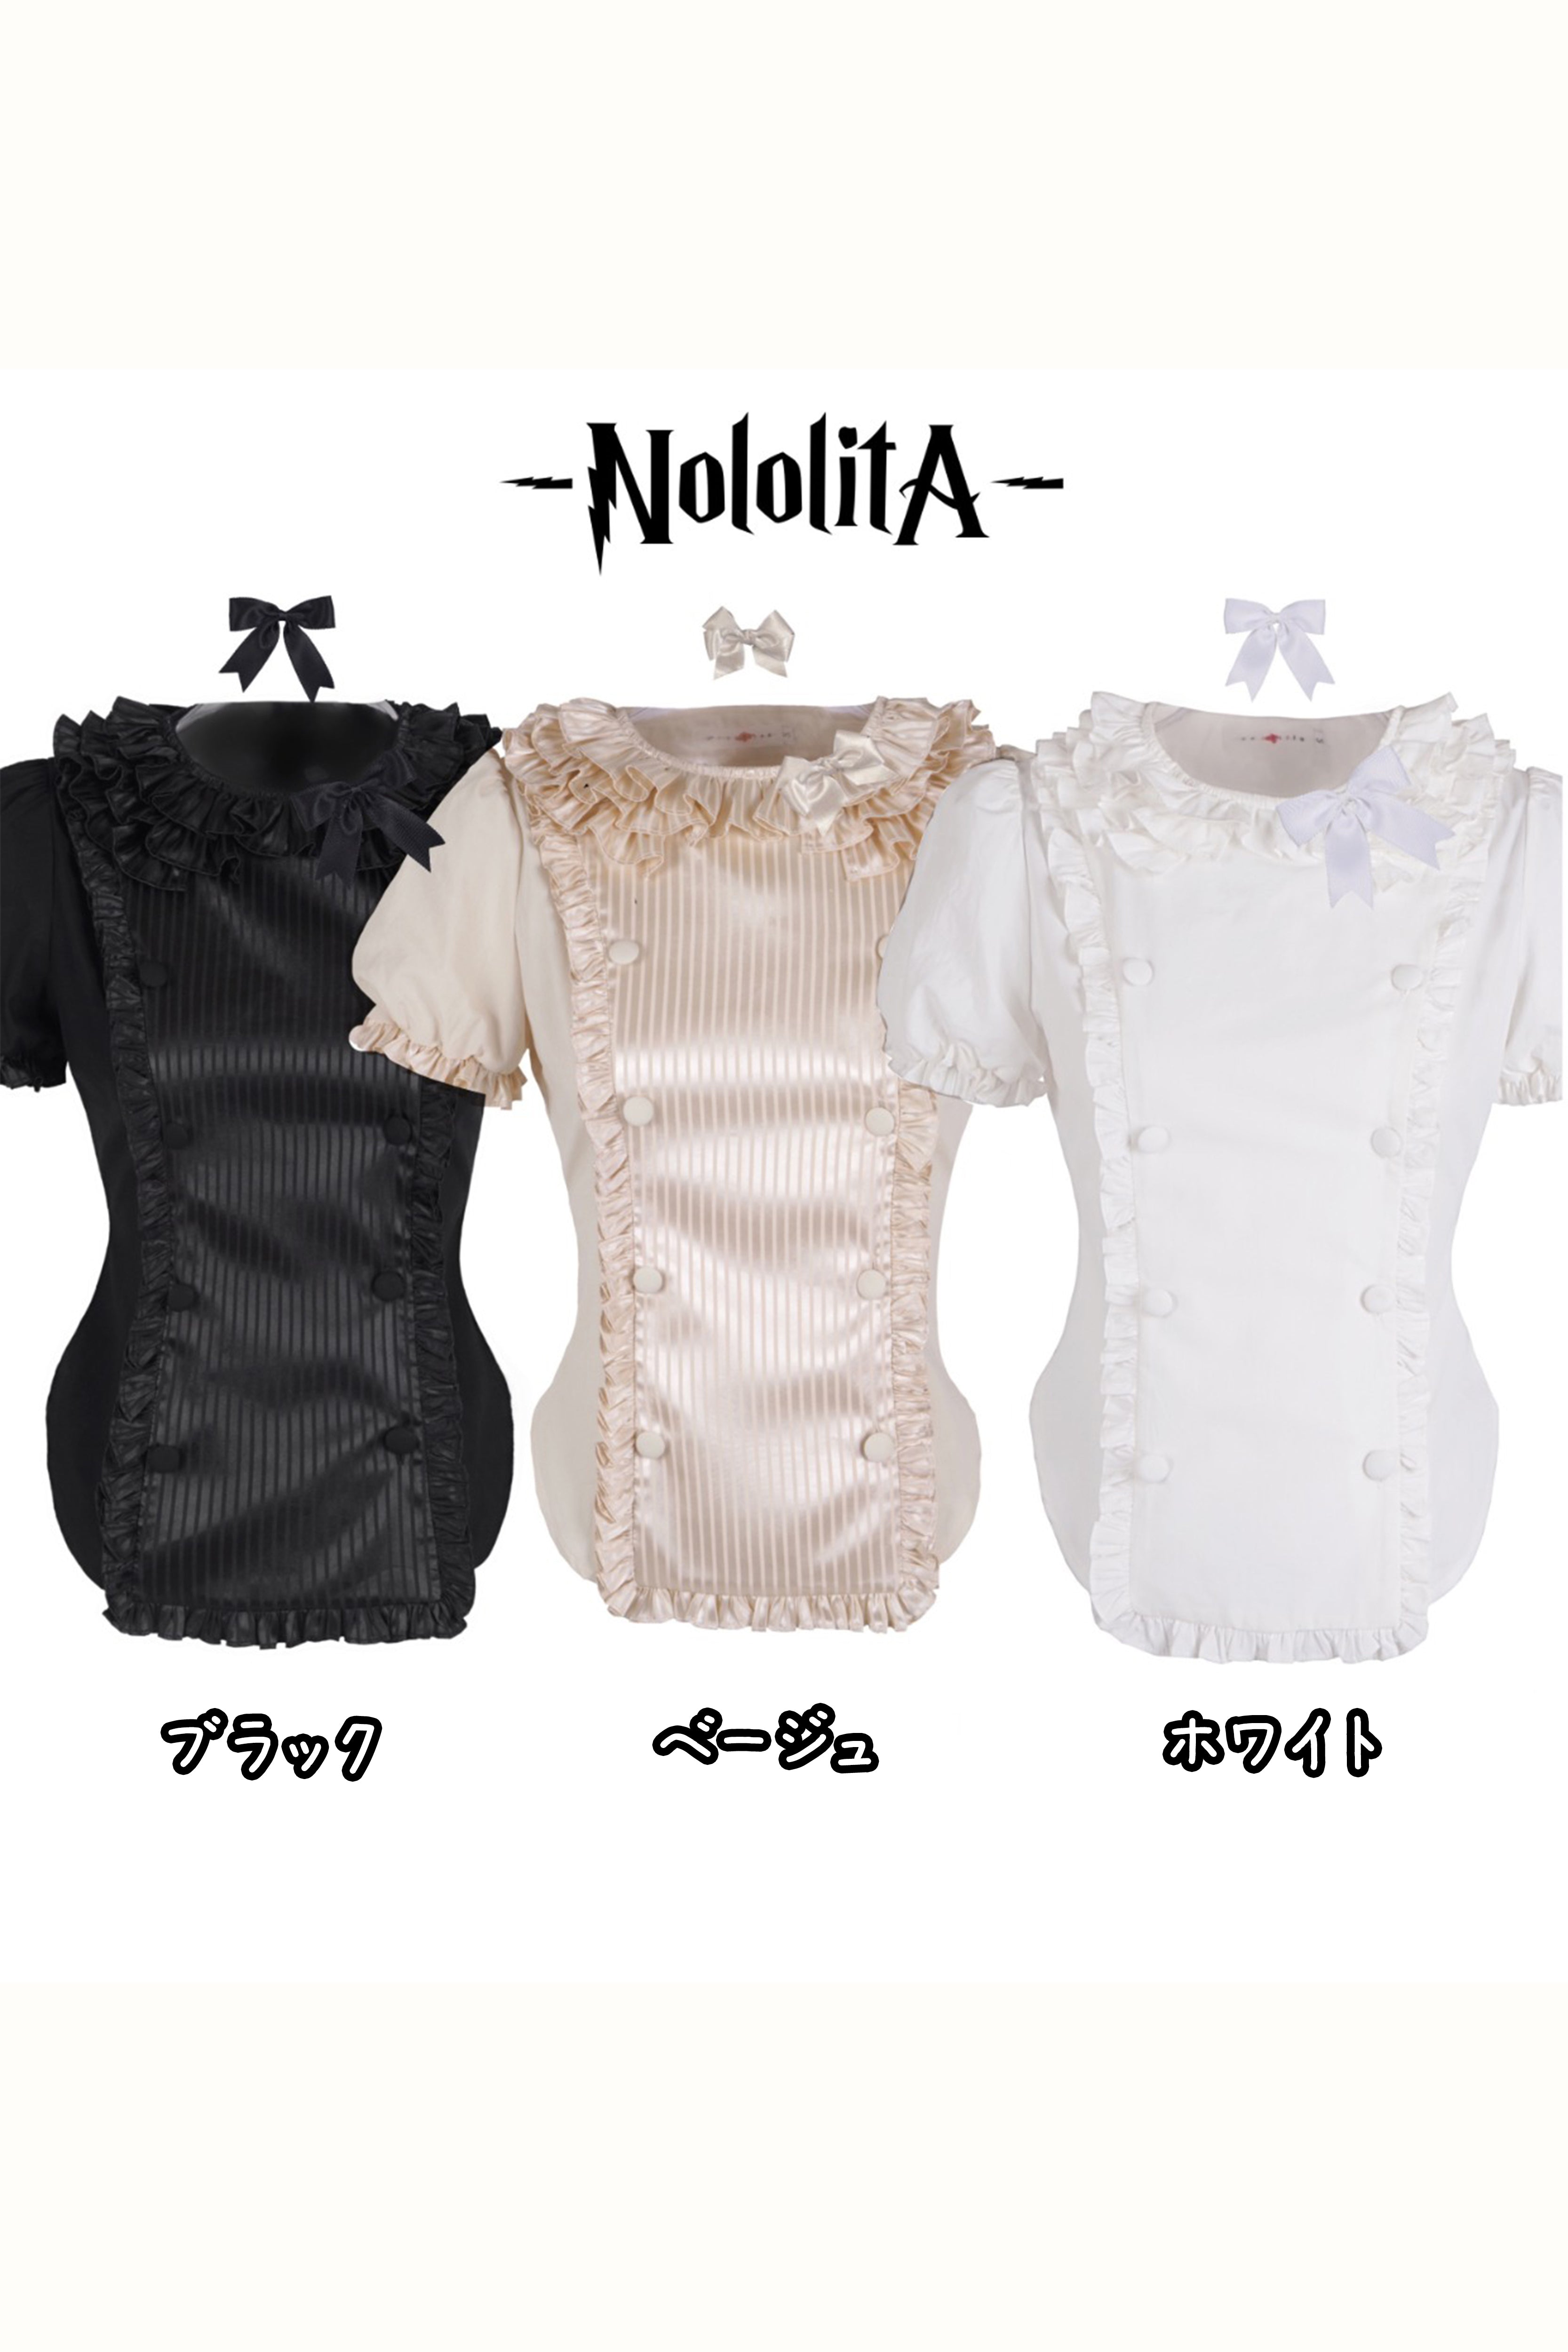 Nololita 3周年アニバーサリー ダブルボタントップス【Nololita】